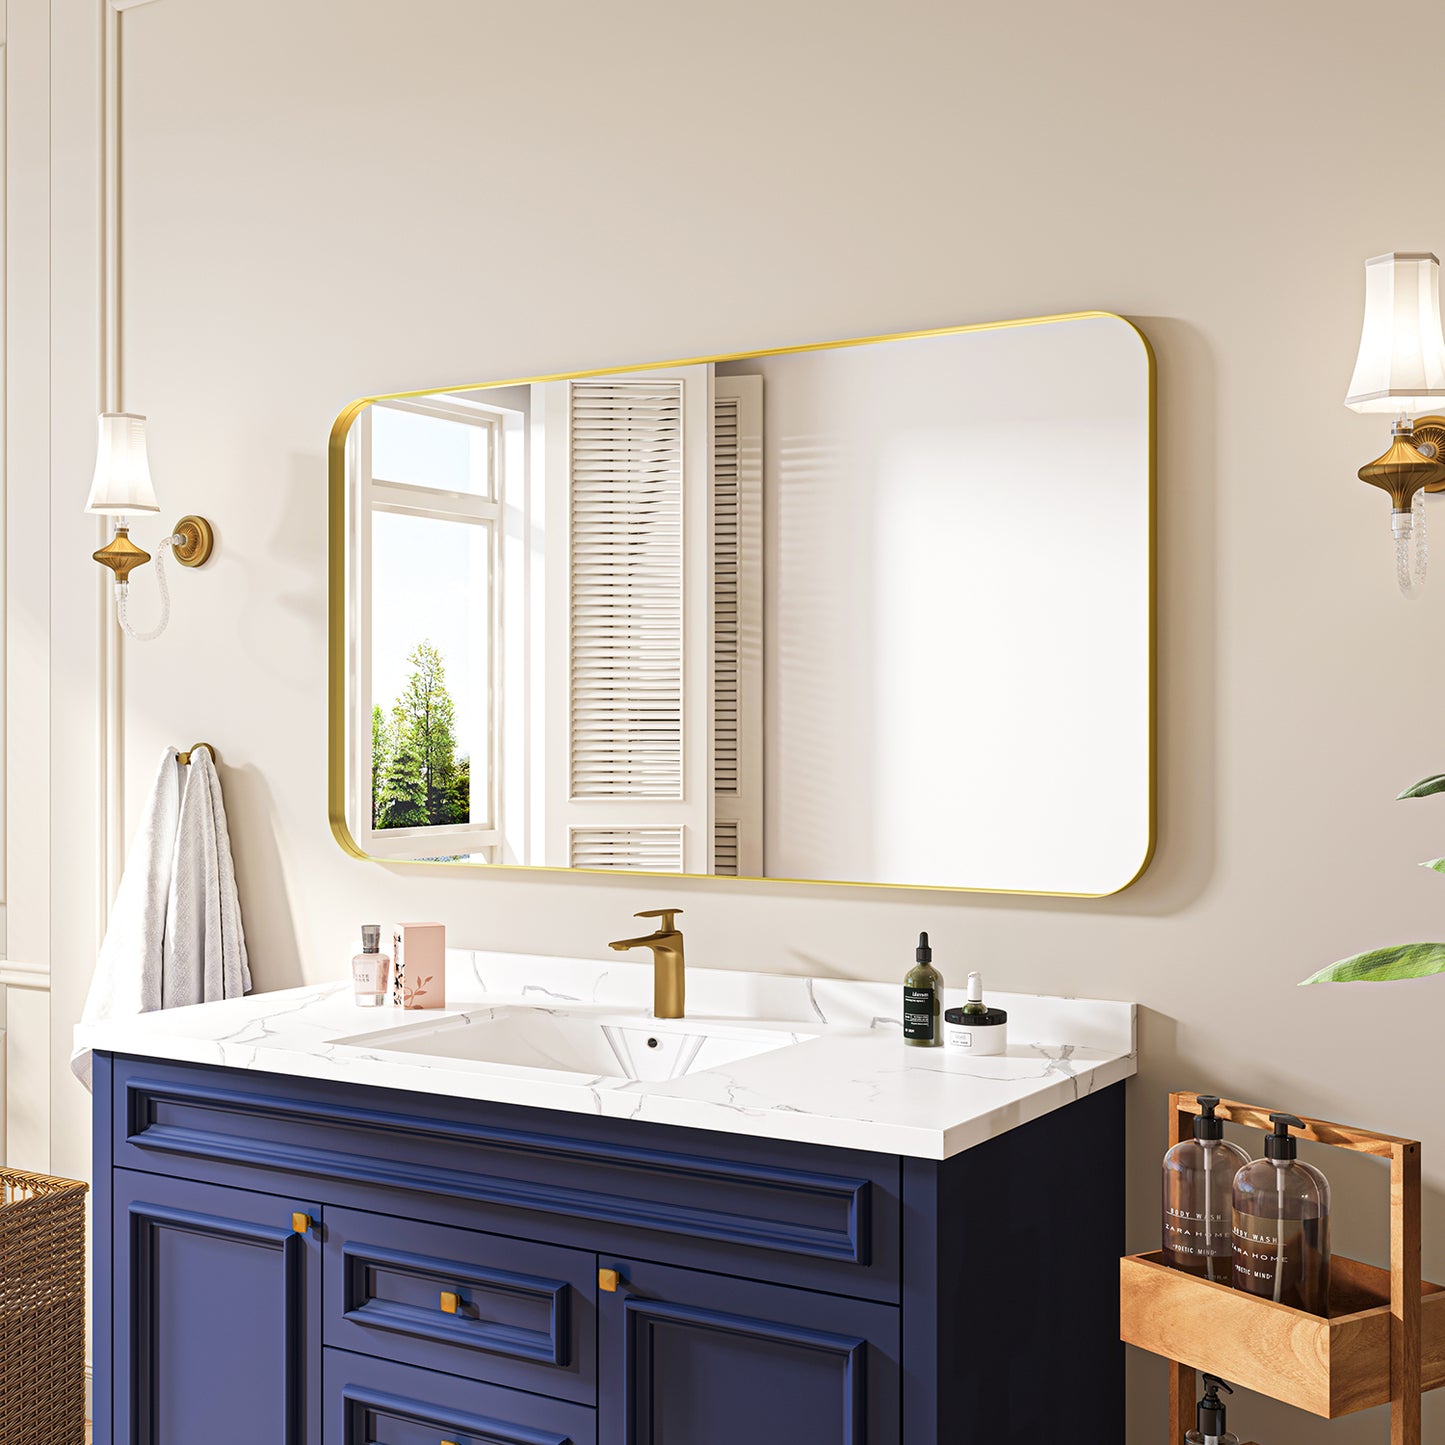 Waterpar® 55 in. W x 30 in. H Rectangular Aluminum Framed Wall Bathroom Vanity Mirror